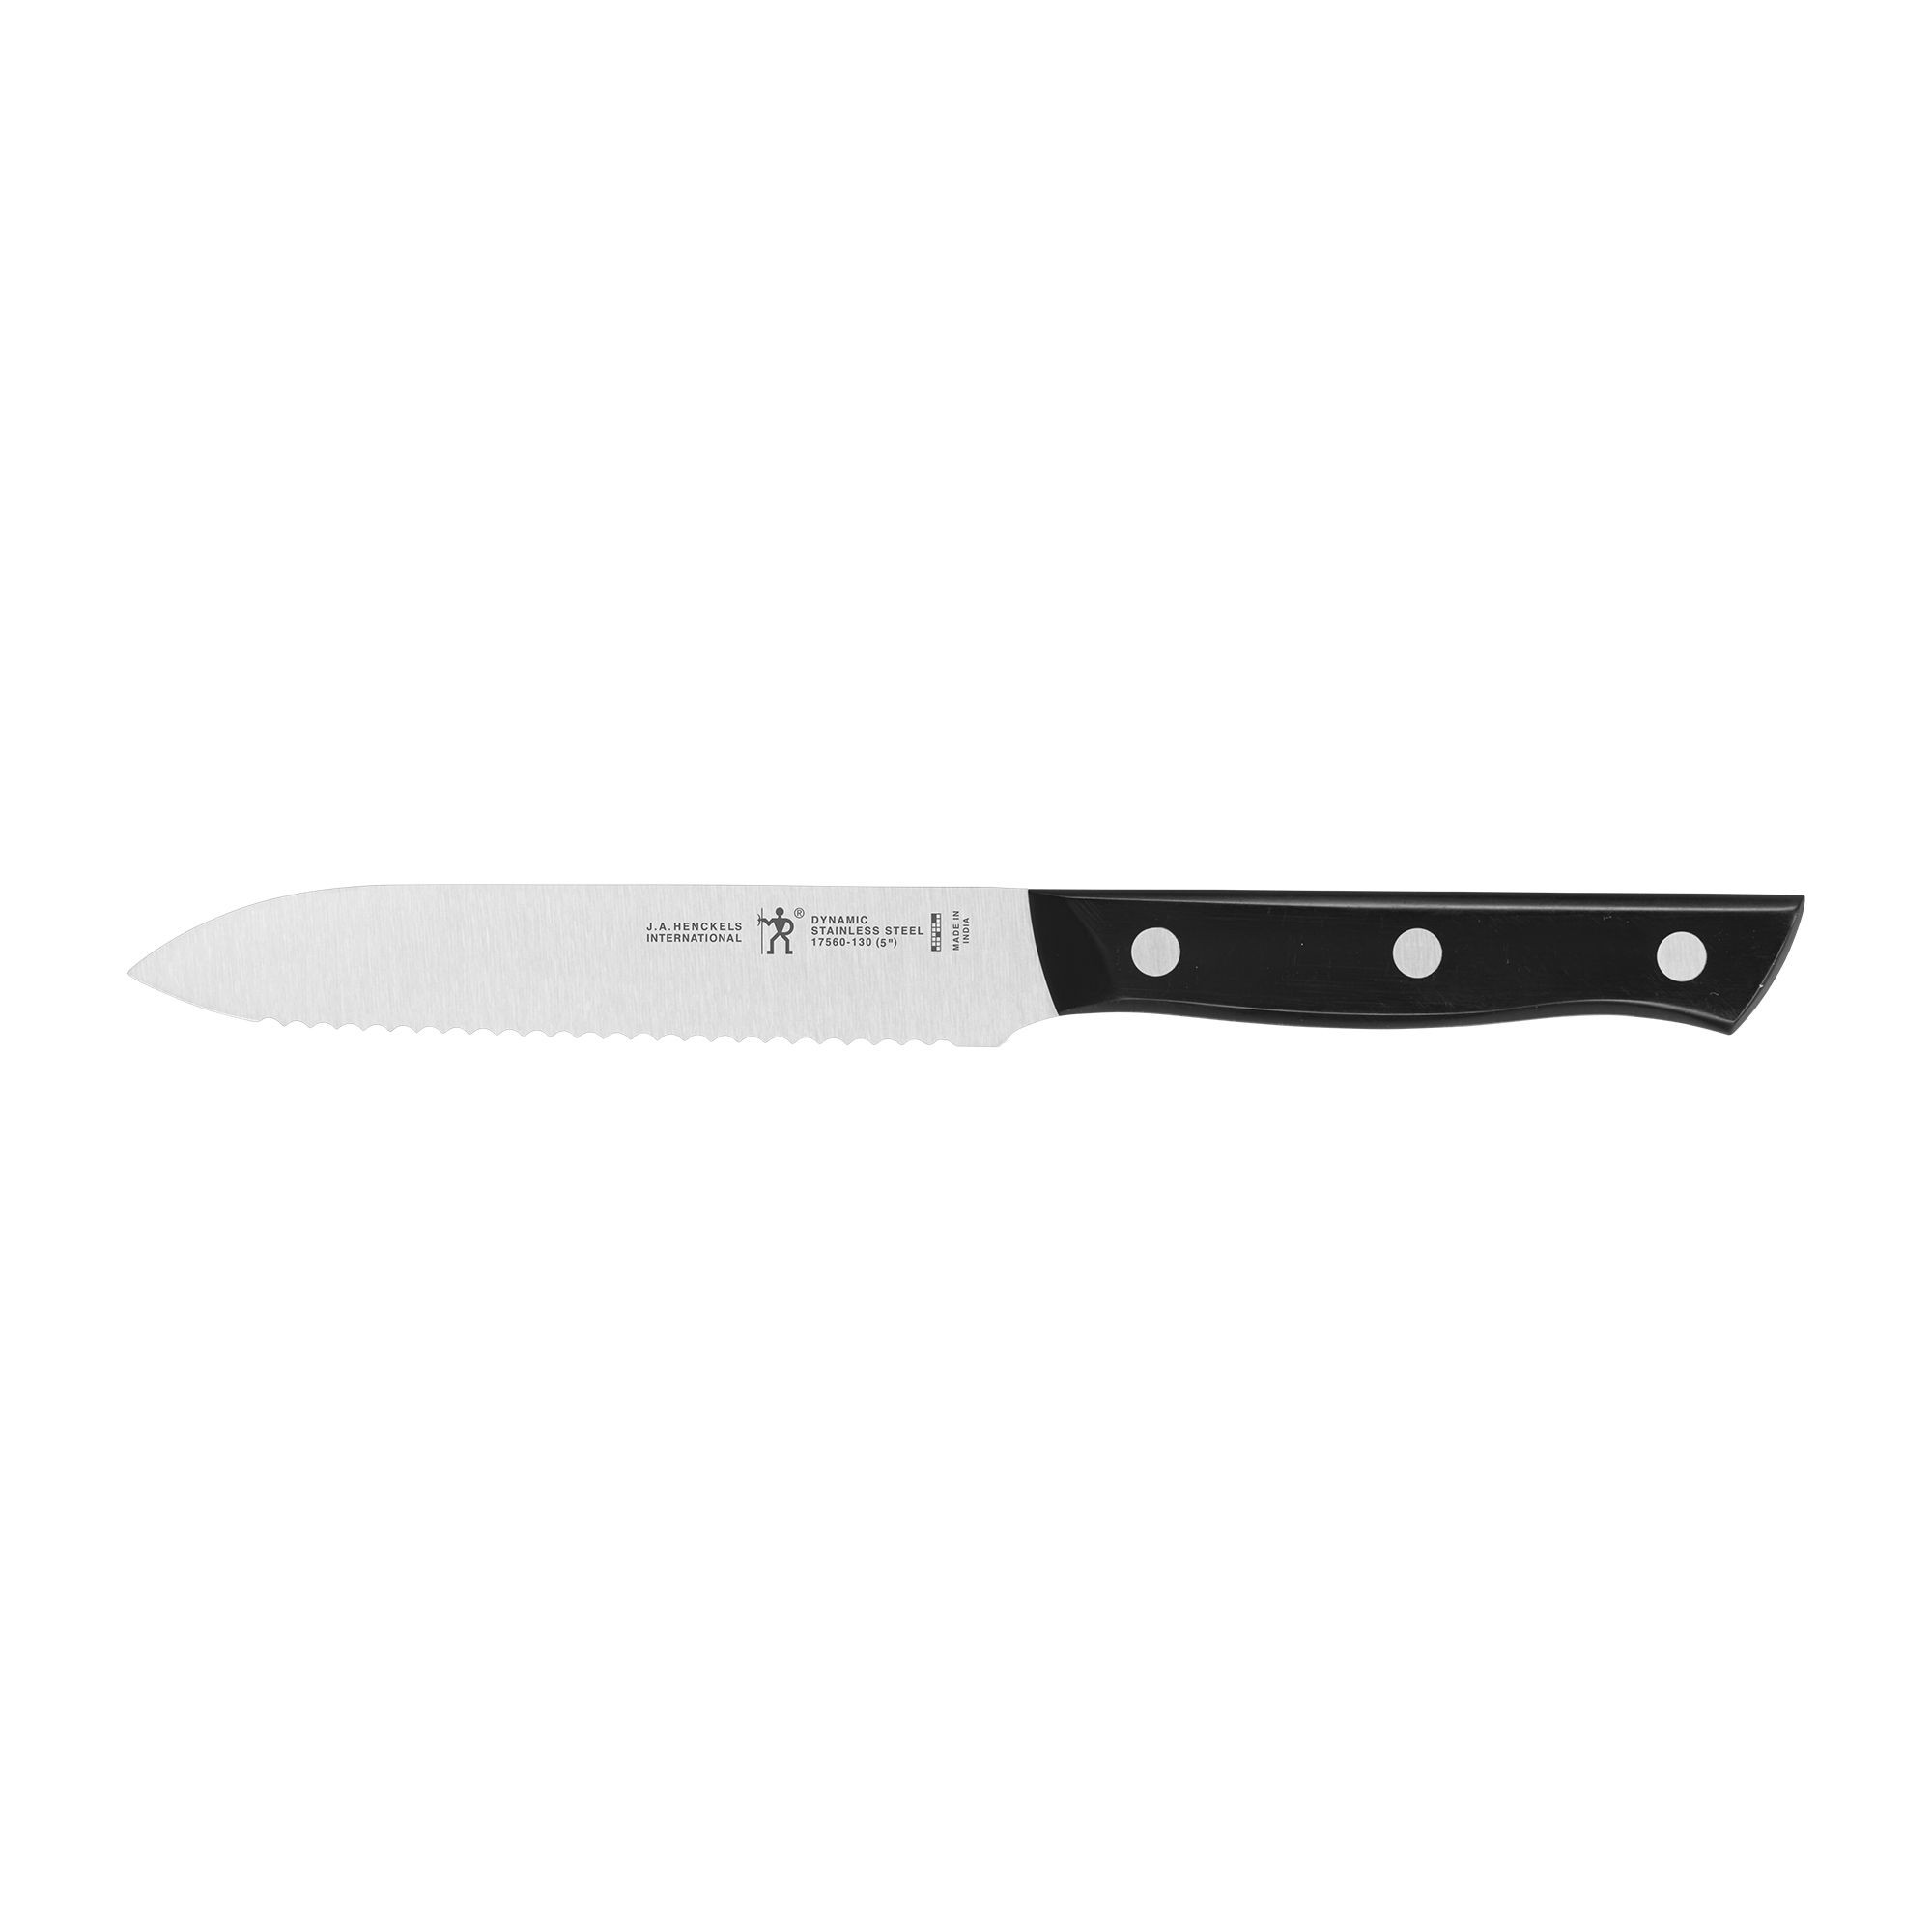 Cuisinart Classic Normandy Knife Block, Set of 19